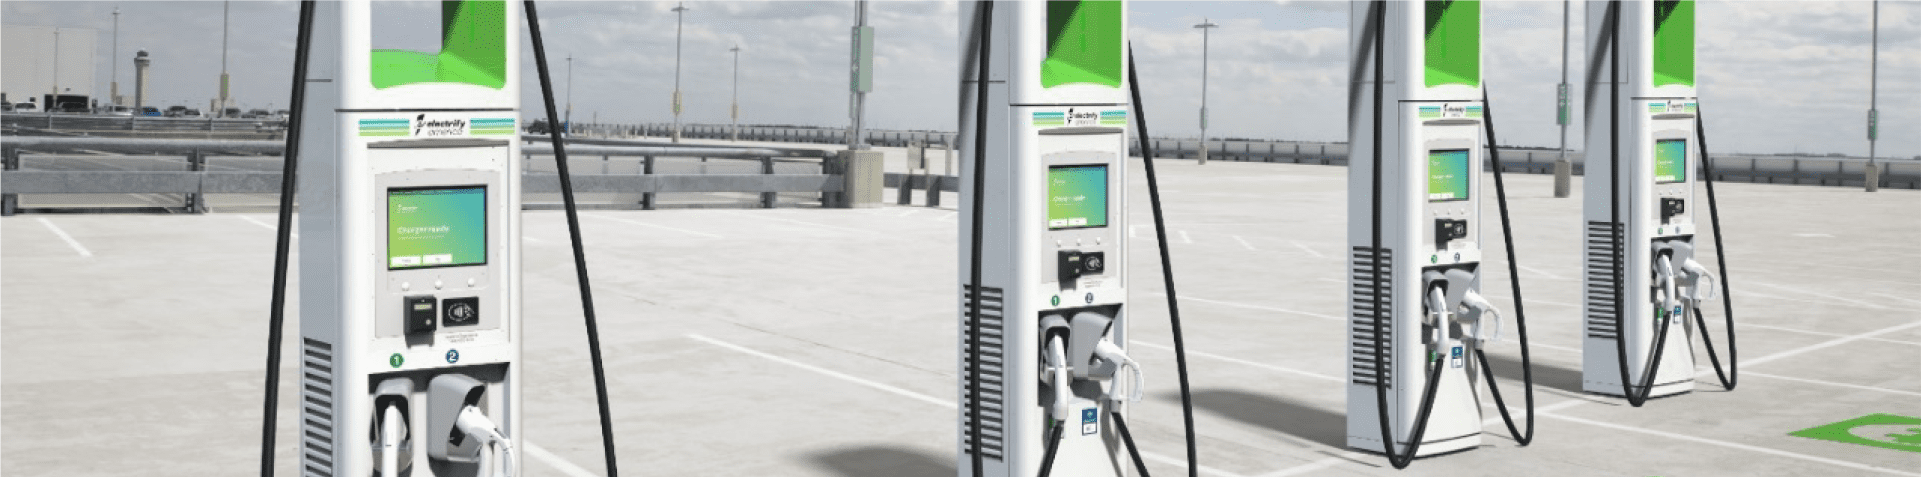 charging stations σταθμοι φόρτισης